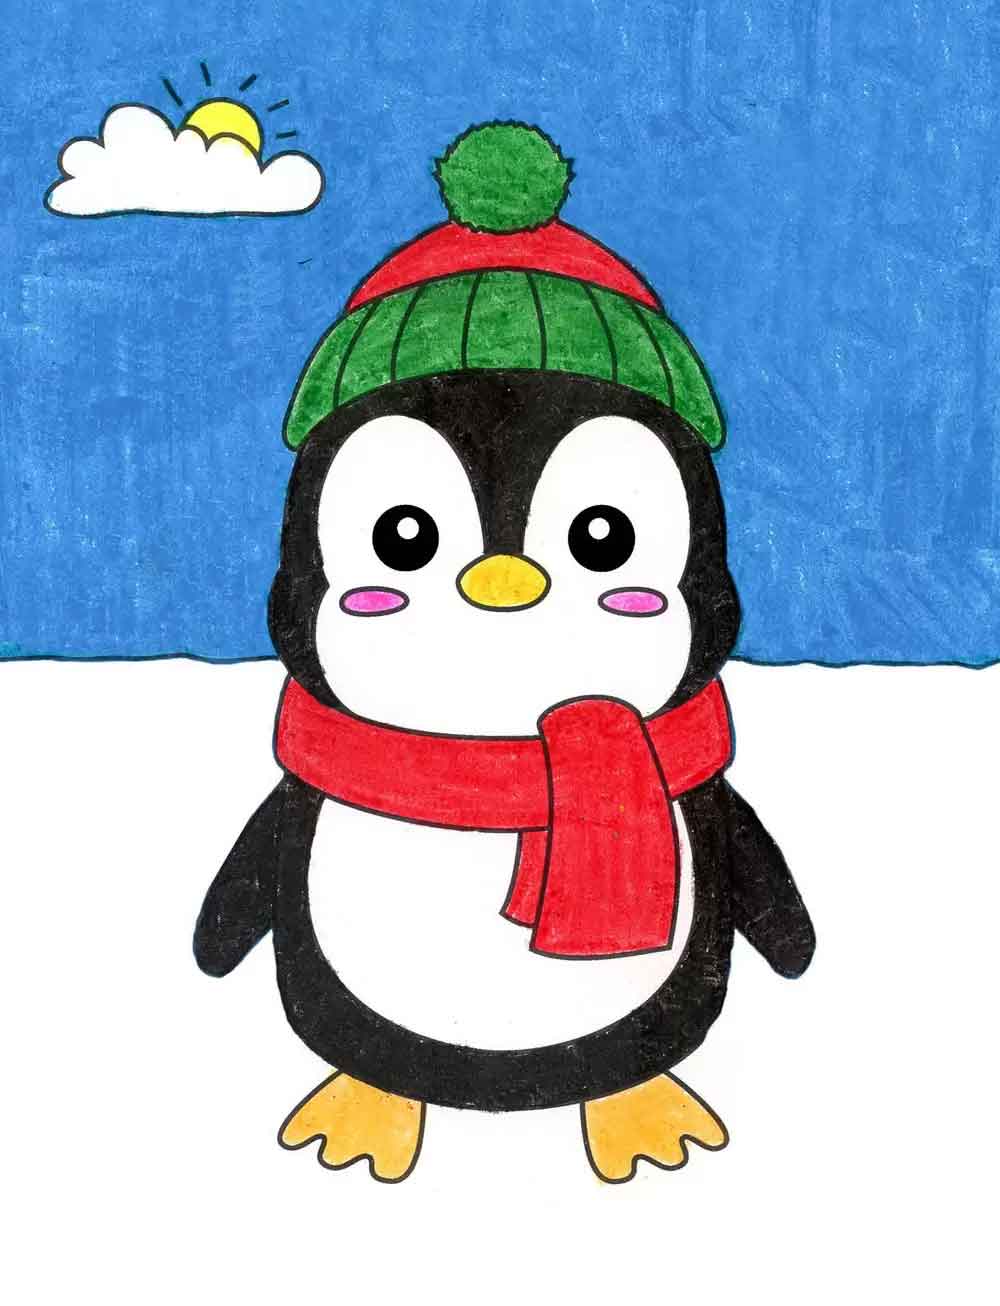 آموزش نقاشی پنگوئن کارتونی